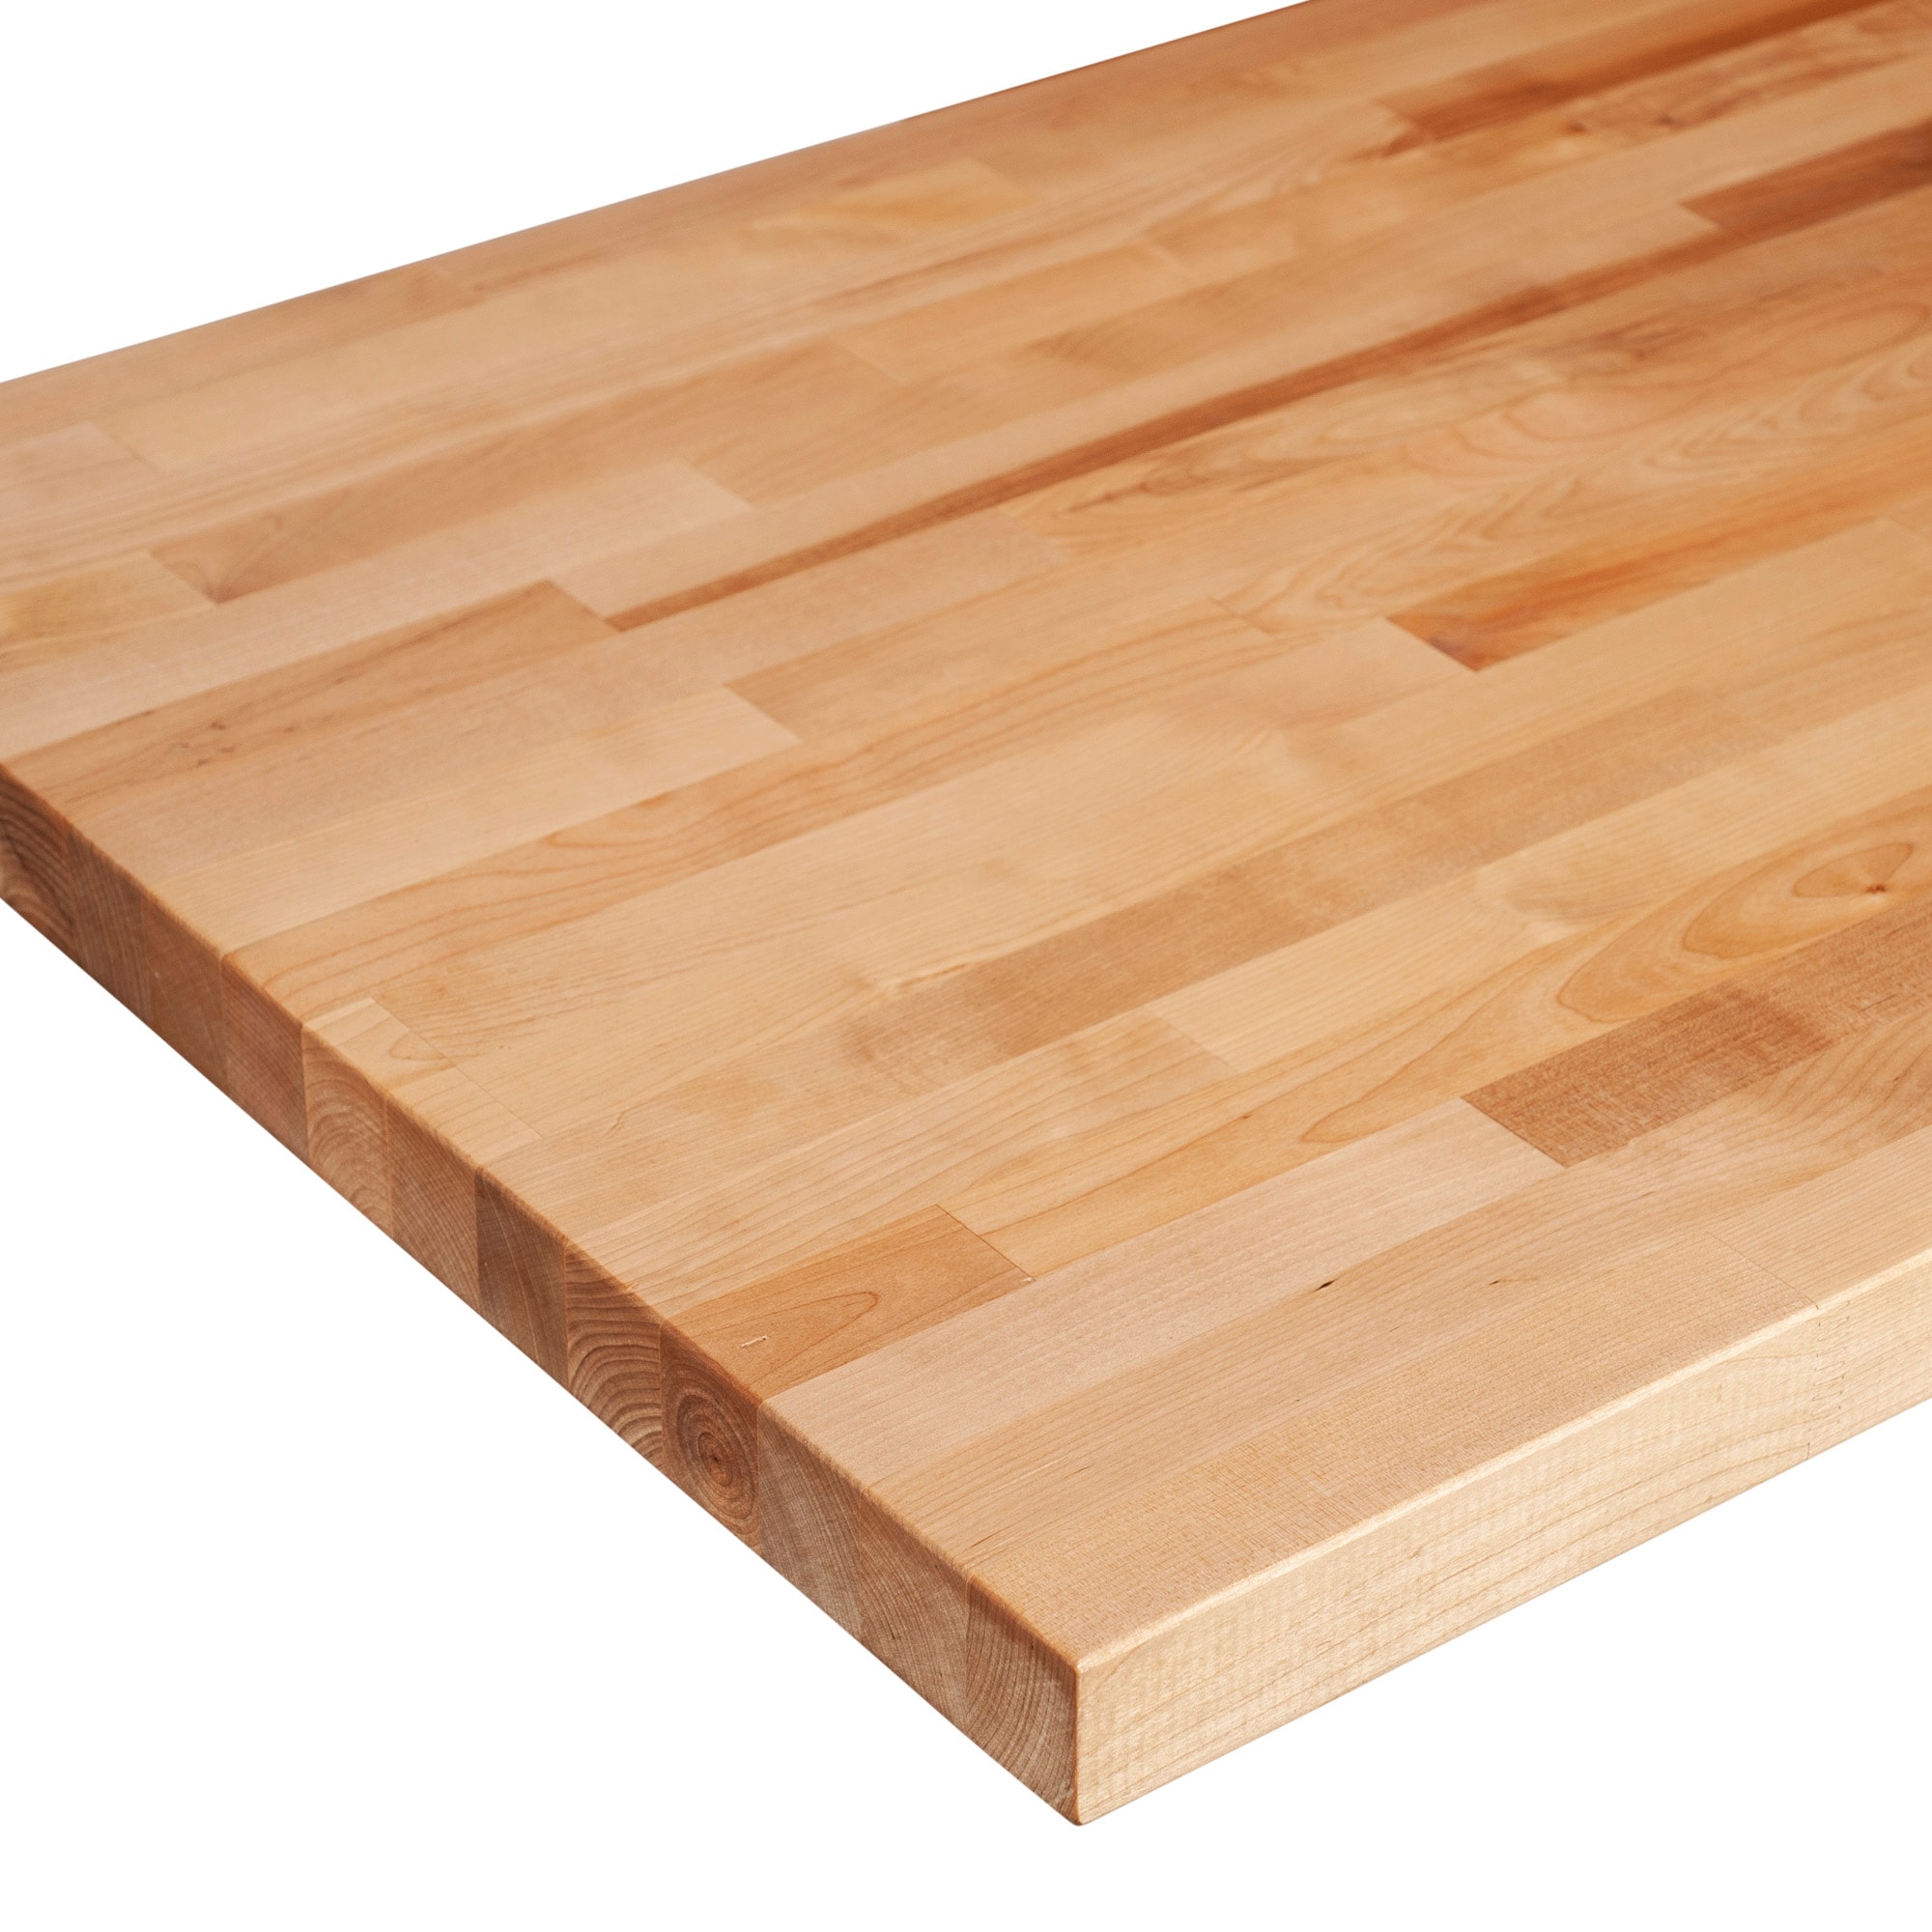 Straight Butcher Block Birch Countertop, How To Make Wood Butcher Block Countertops